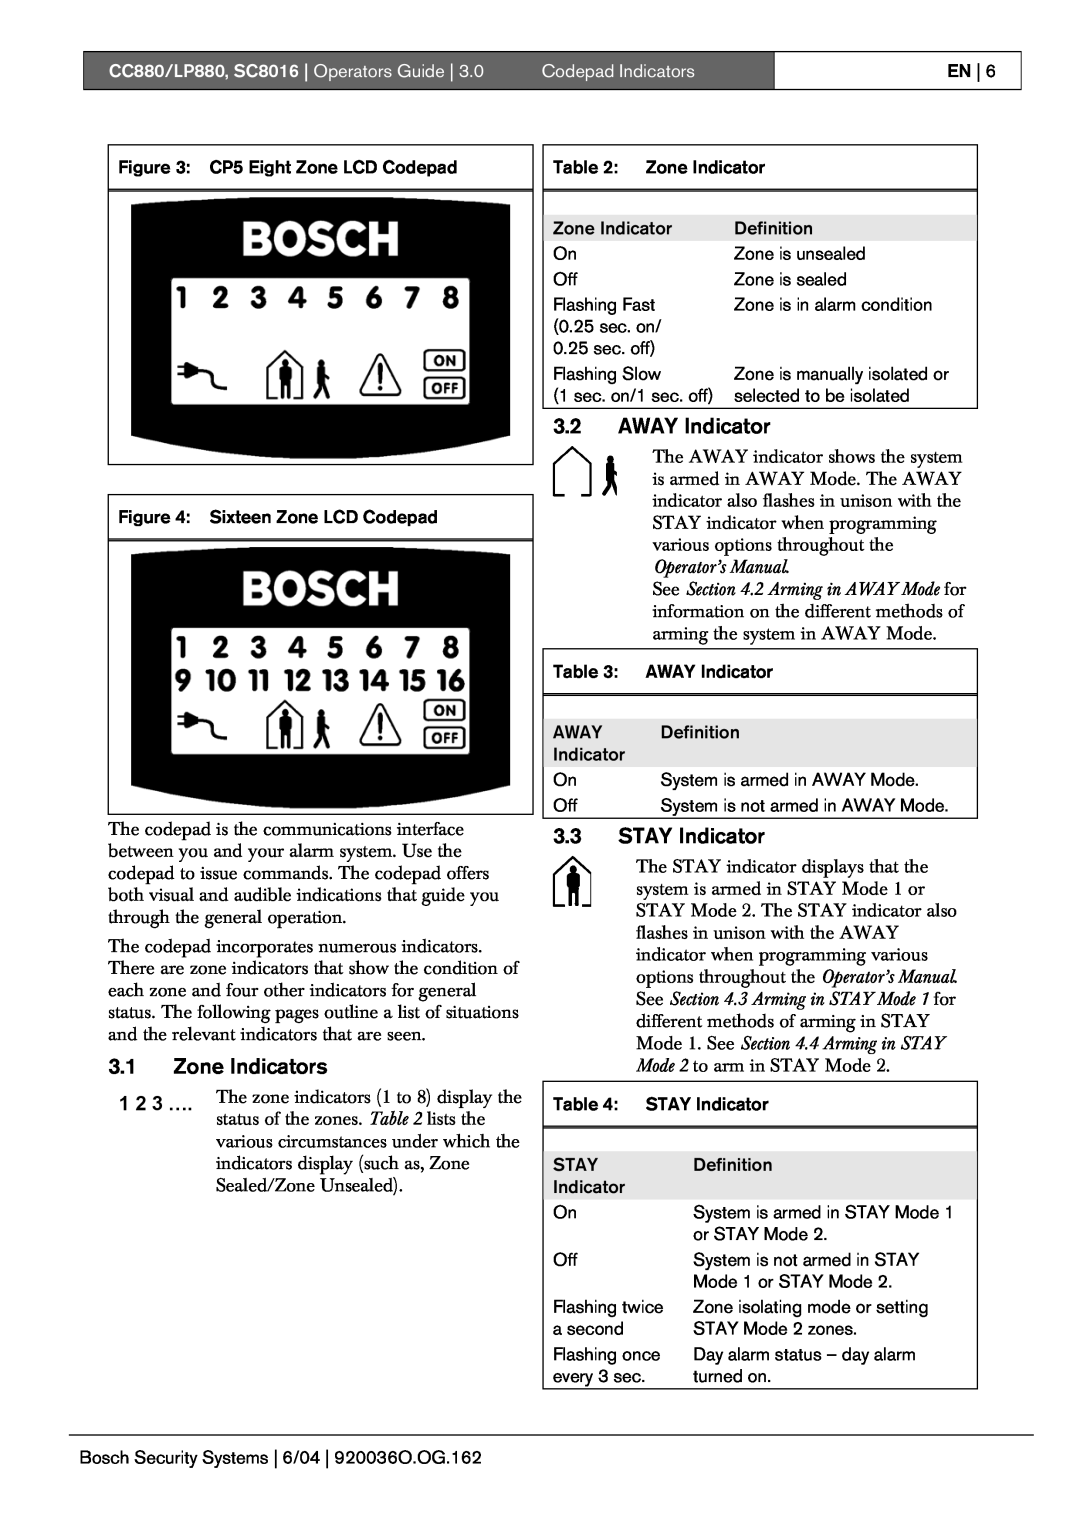 Bosch Appliances CC880 3.1Zone Indicators, 3.2AWAY Indicator, 3.3STAY Indicator, Codepad Indicators, Operator’s Manual 